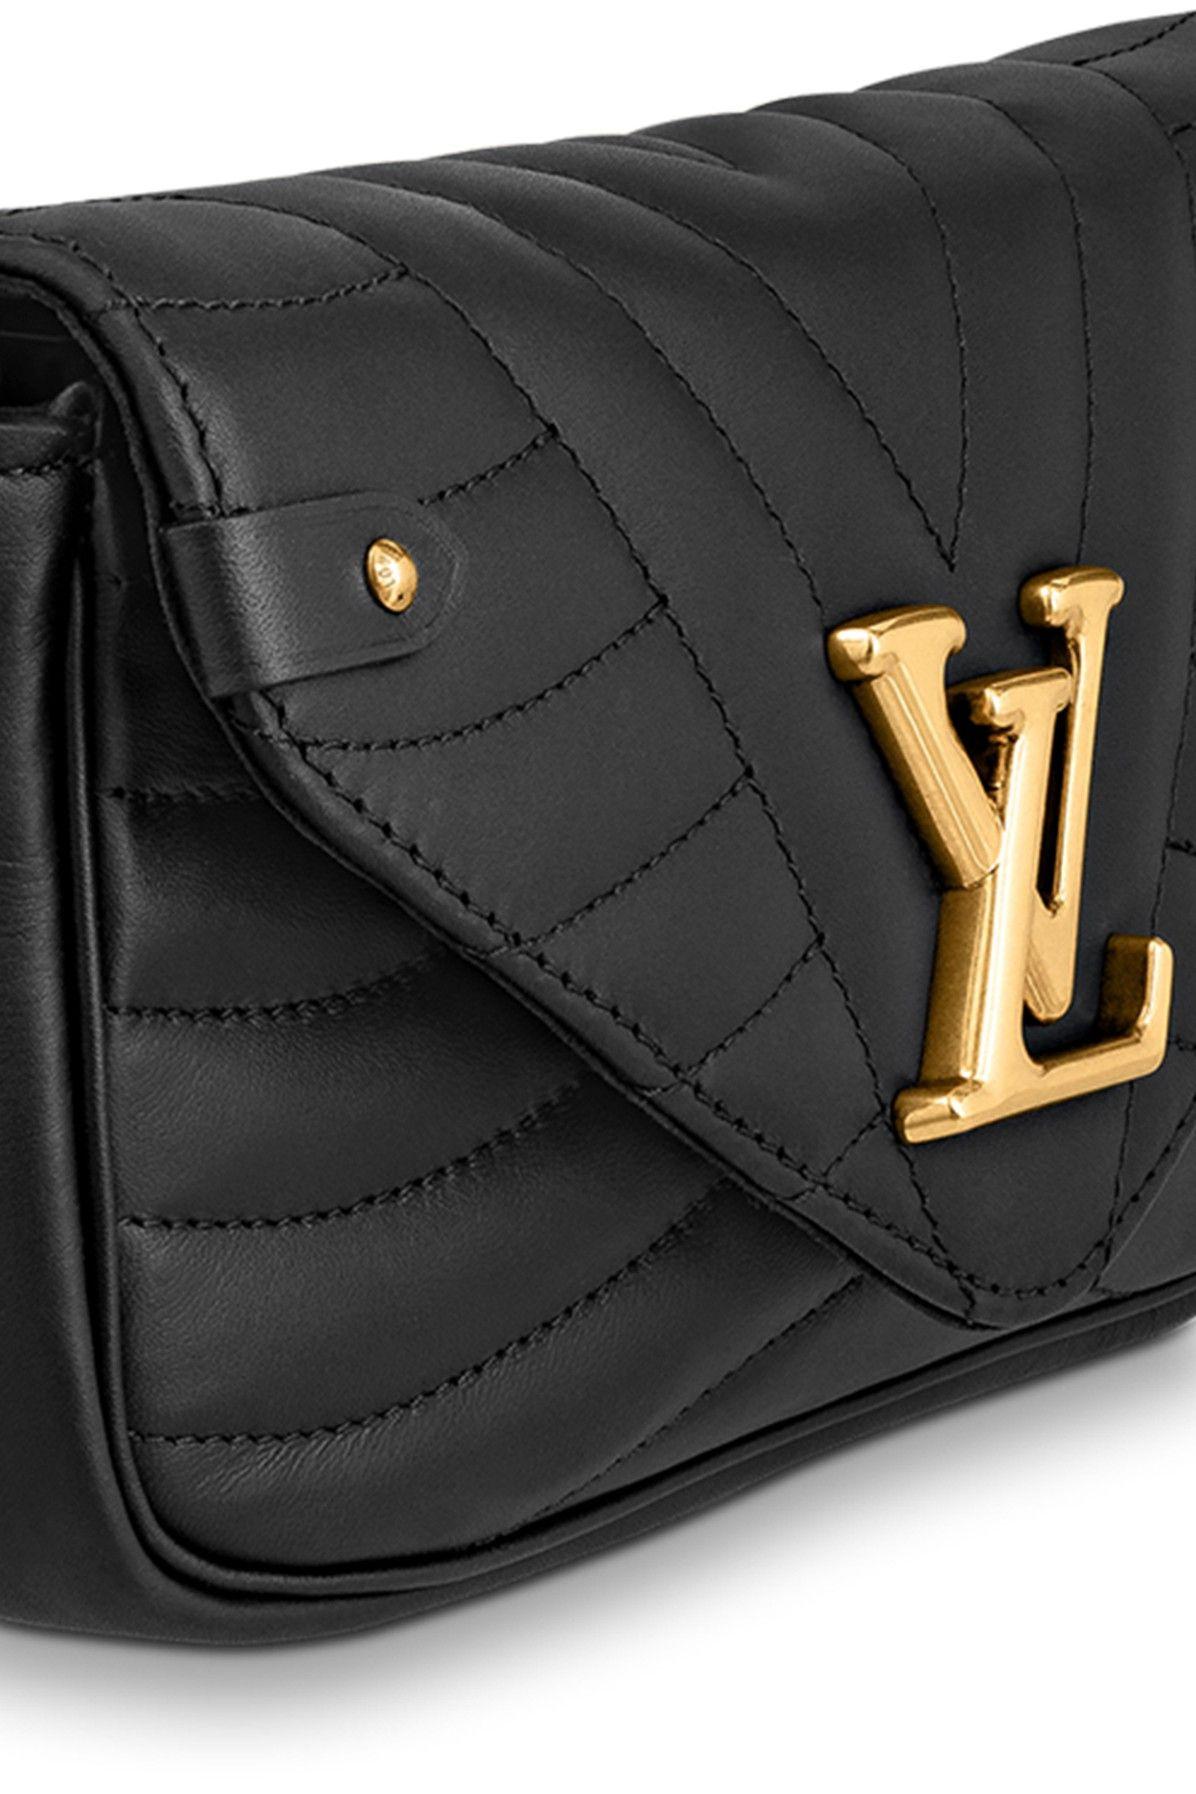 Louis Vuitton New Wave Chain Pochette in Black